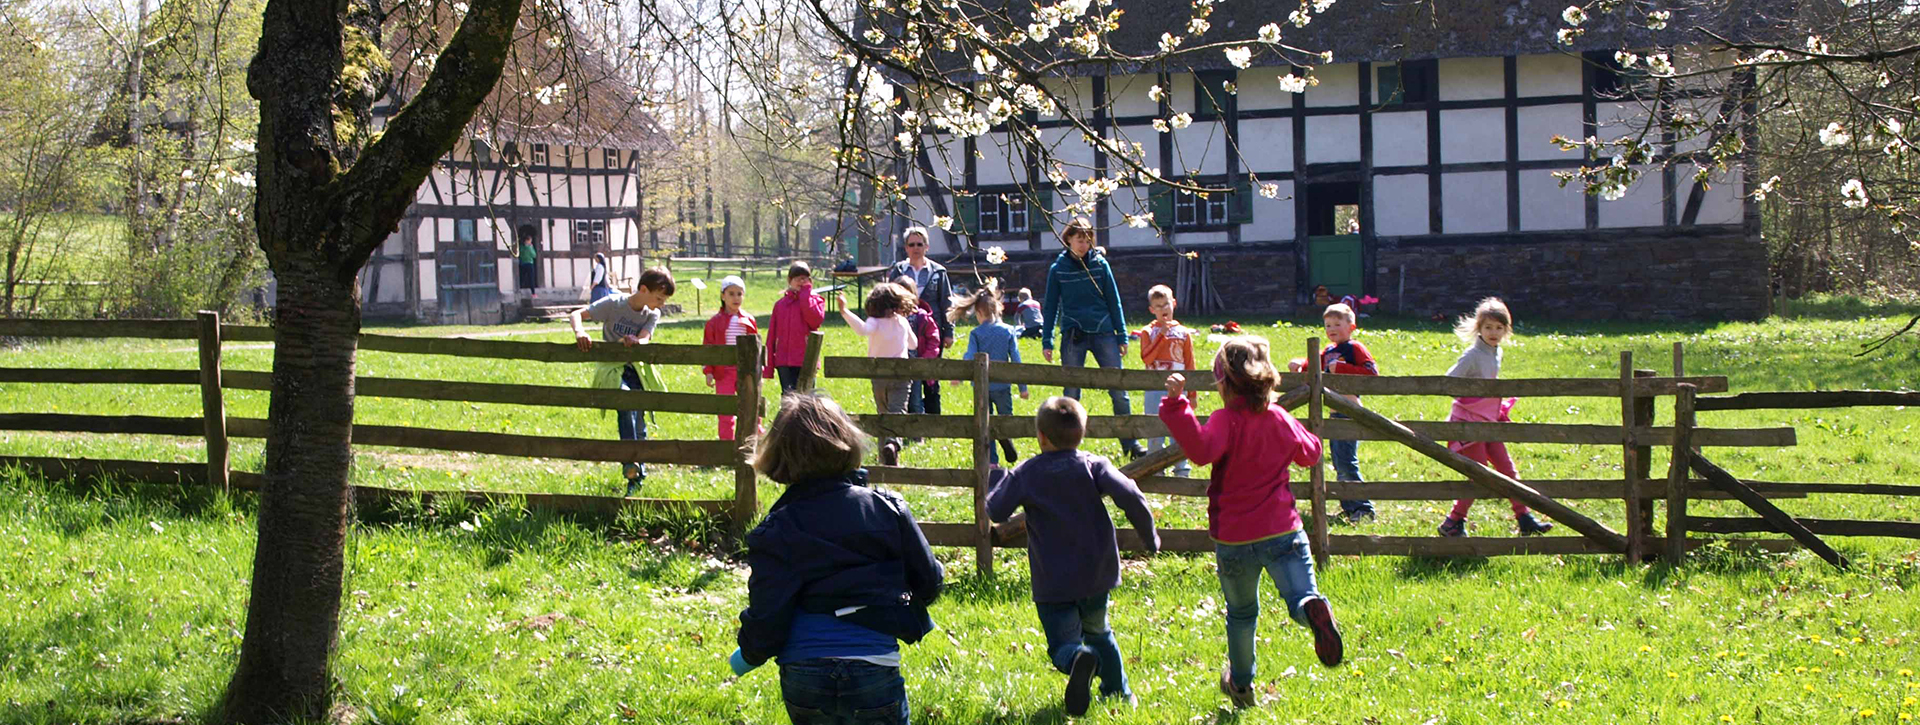 Children run across a meadow towards half-timbered houses